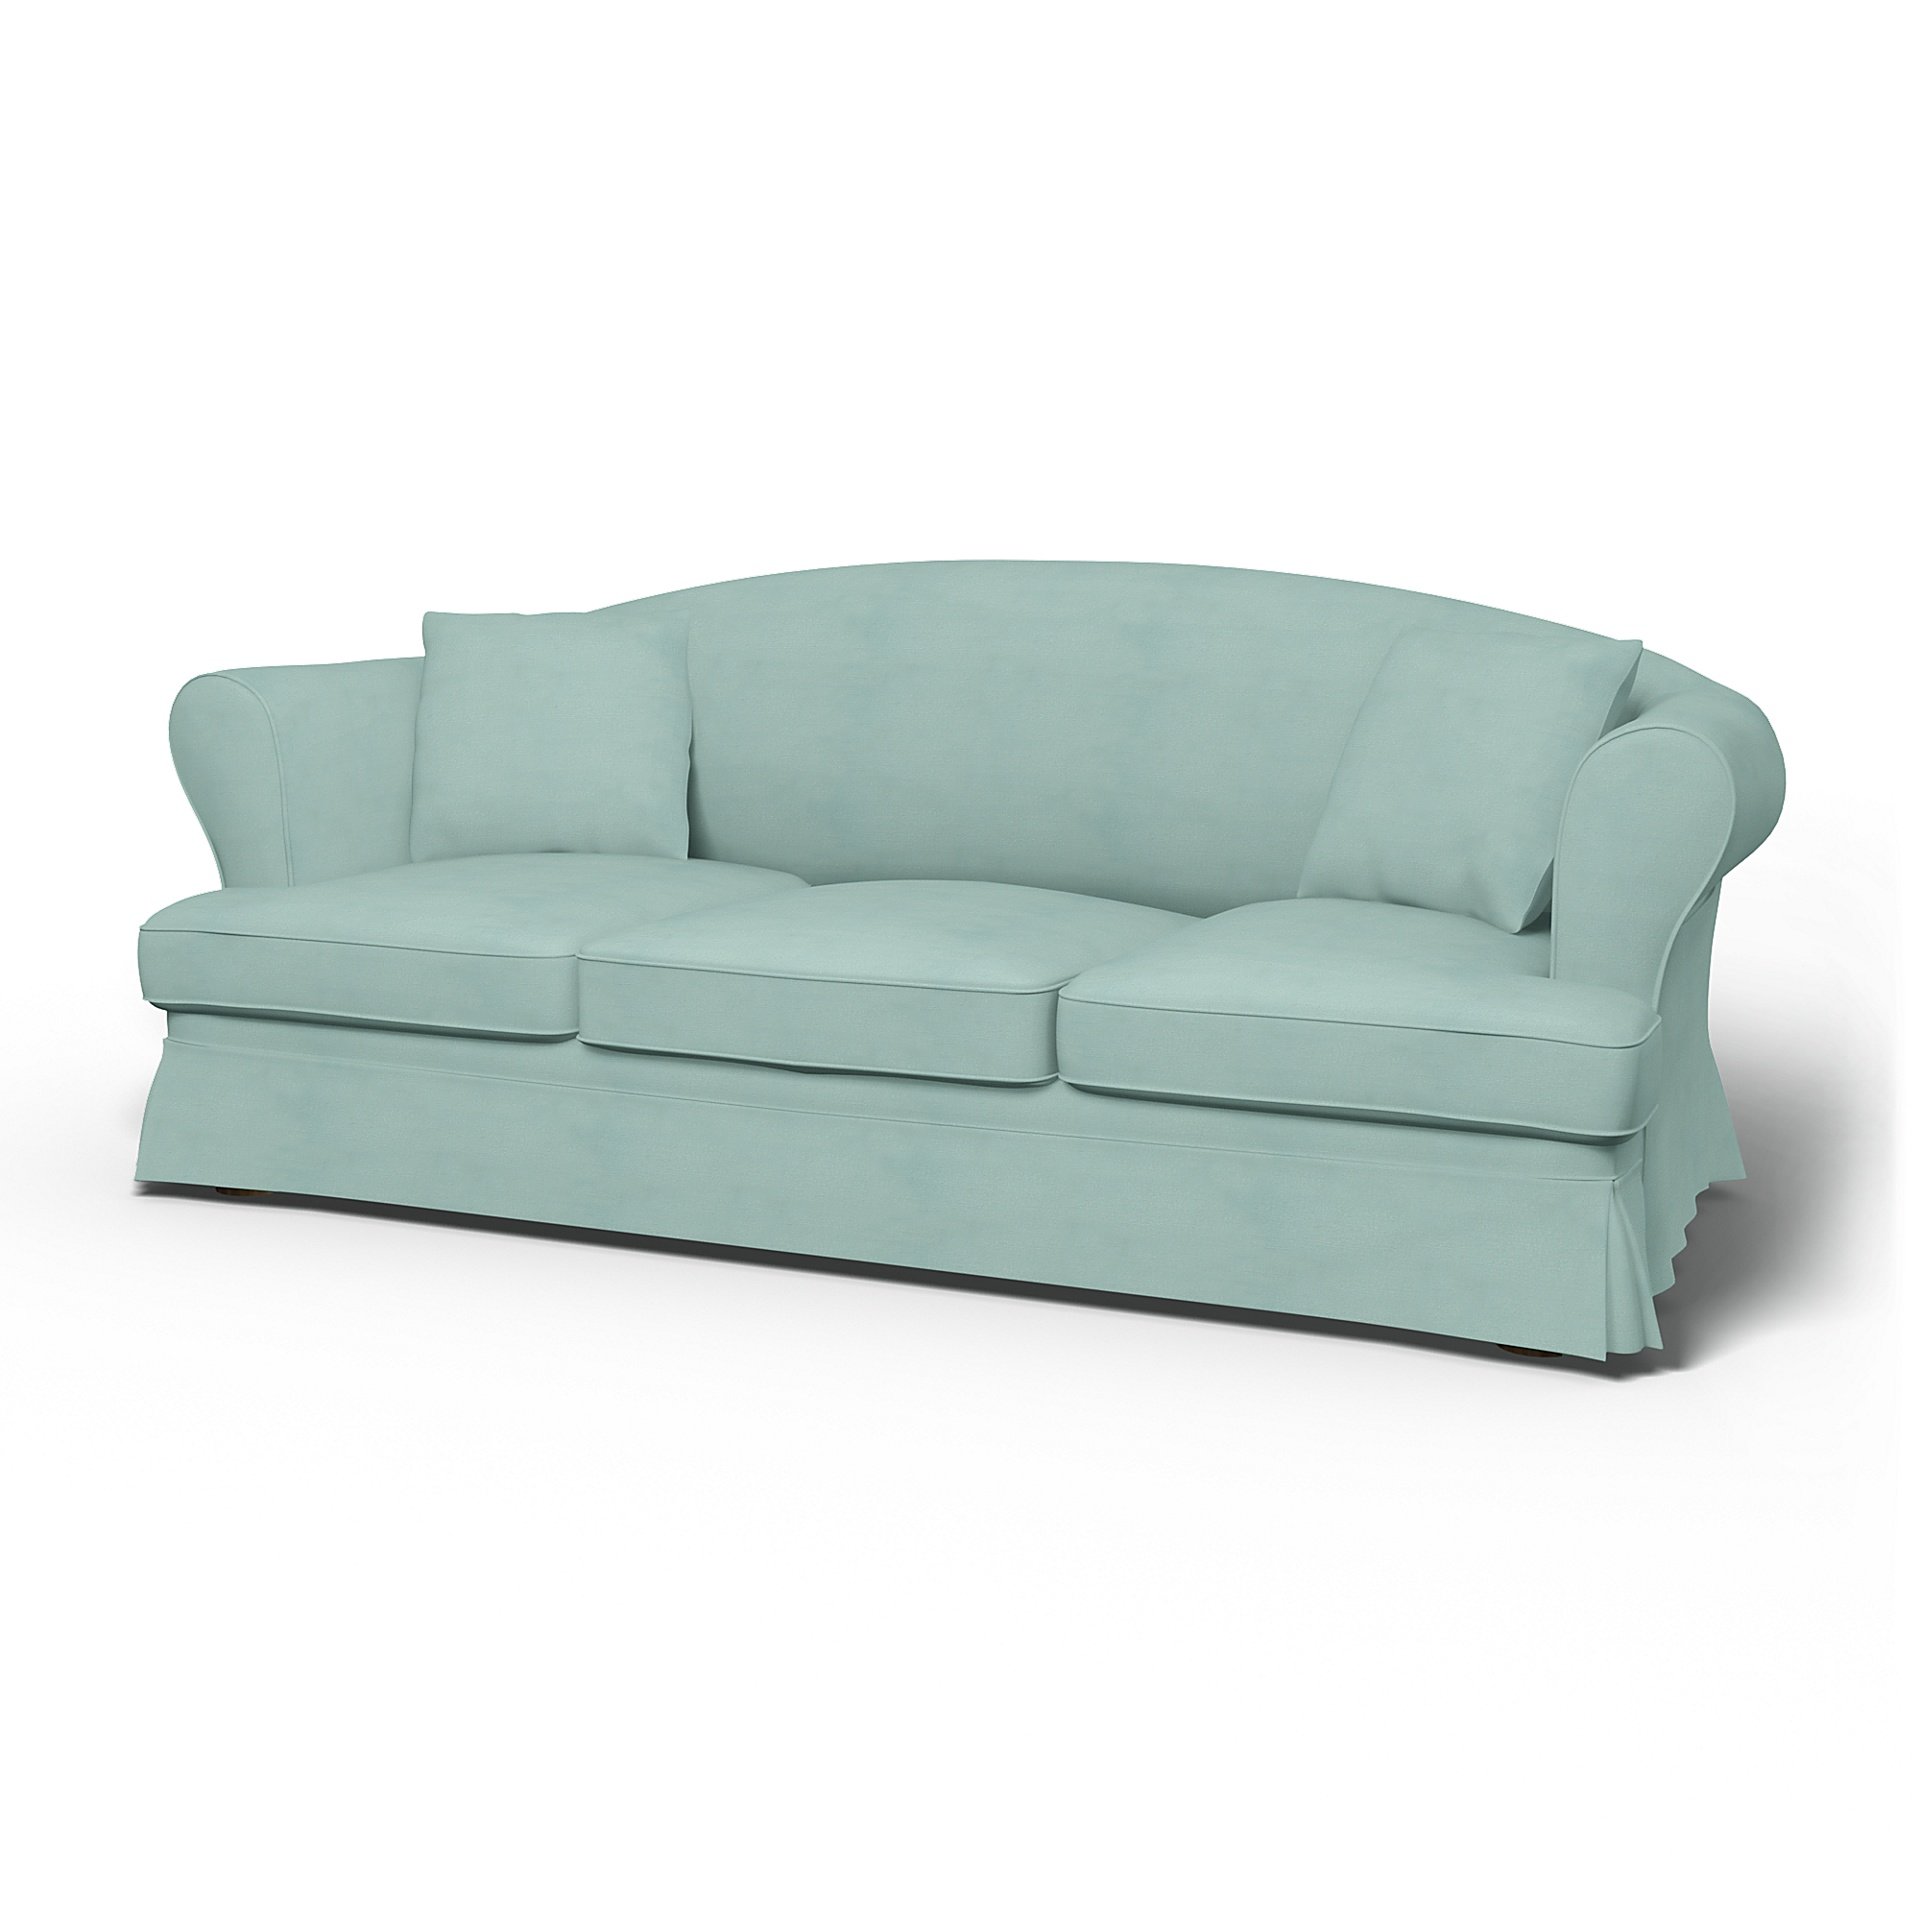 IKEA - Sundborn 3 Seater Sofa Cover, Mineral Blue, Linen - Bemz